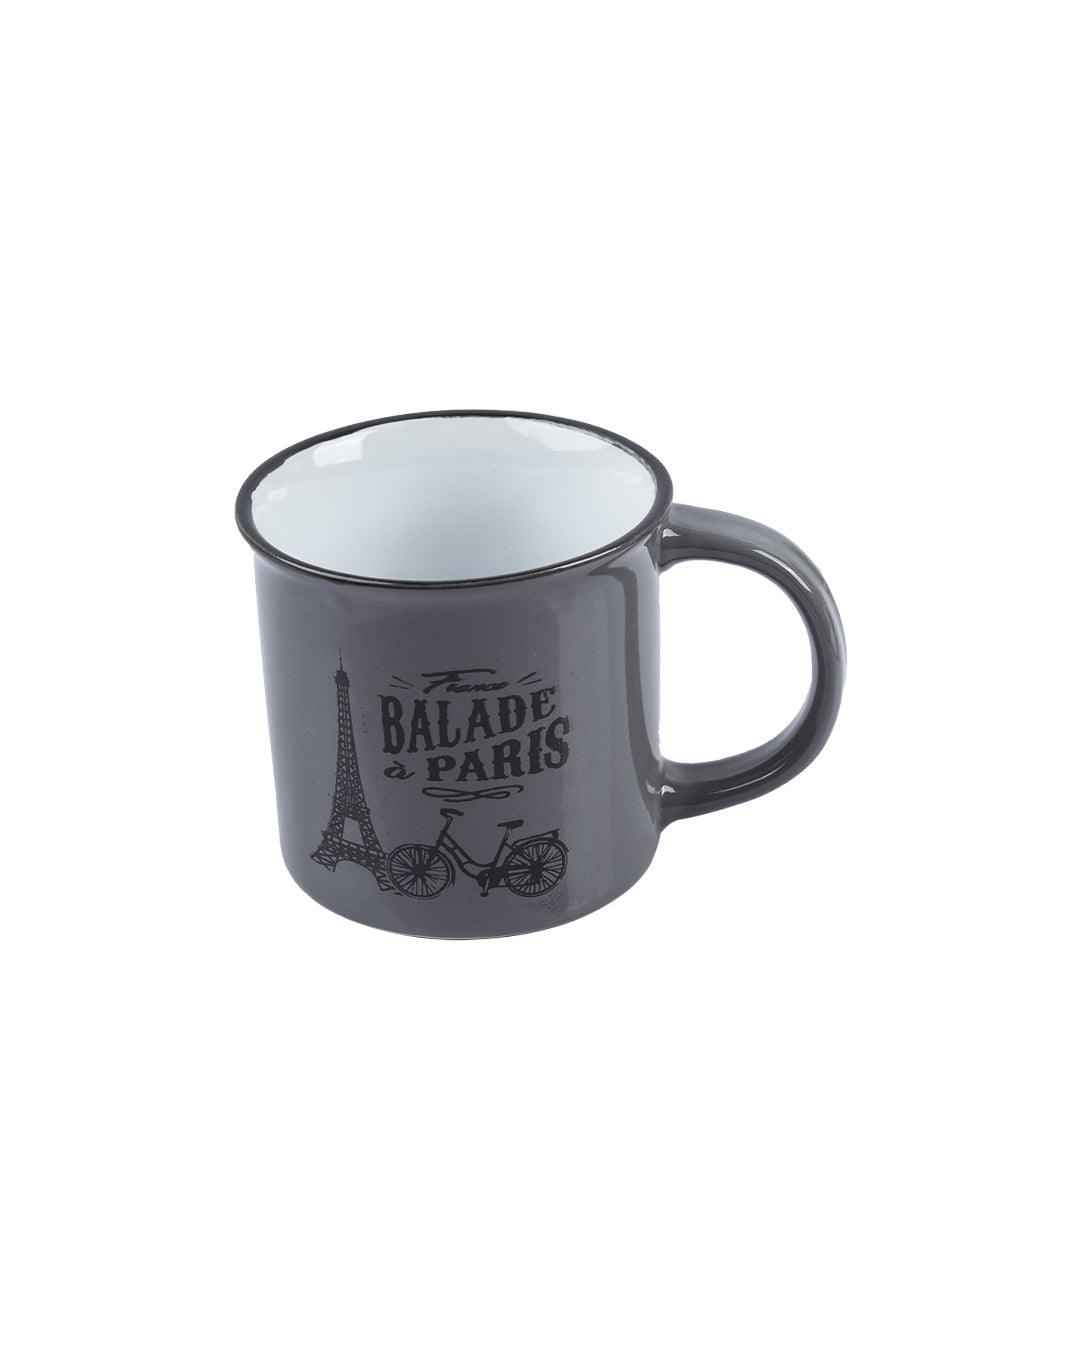 Coffee Mug, Ballade a Paris, Grey, Ceramic, 200 mL - MARKET 99